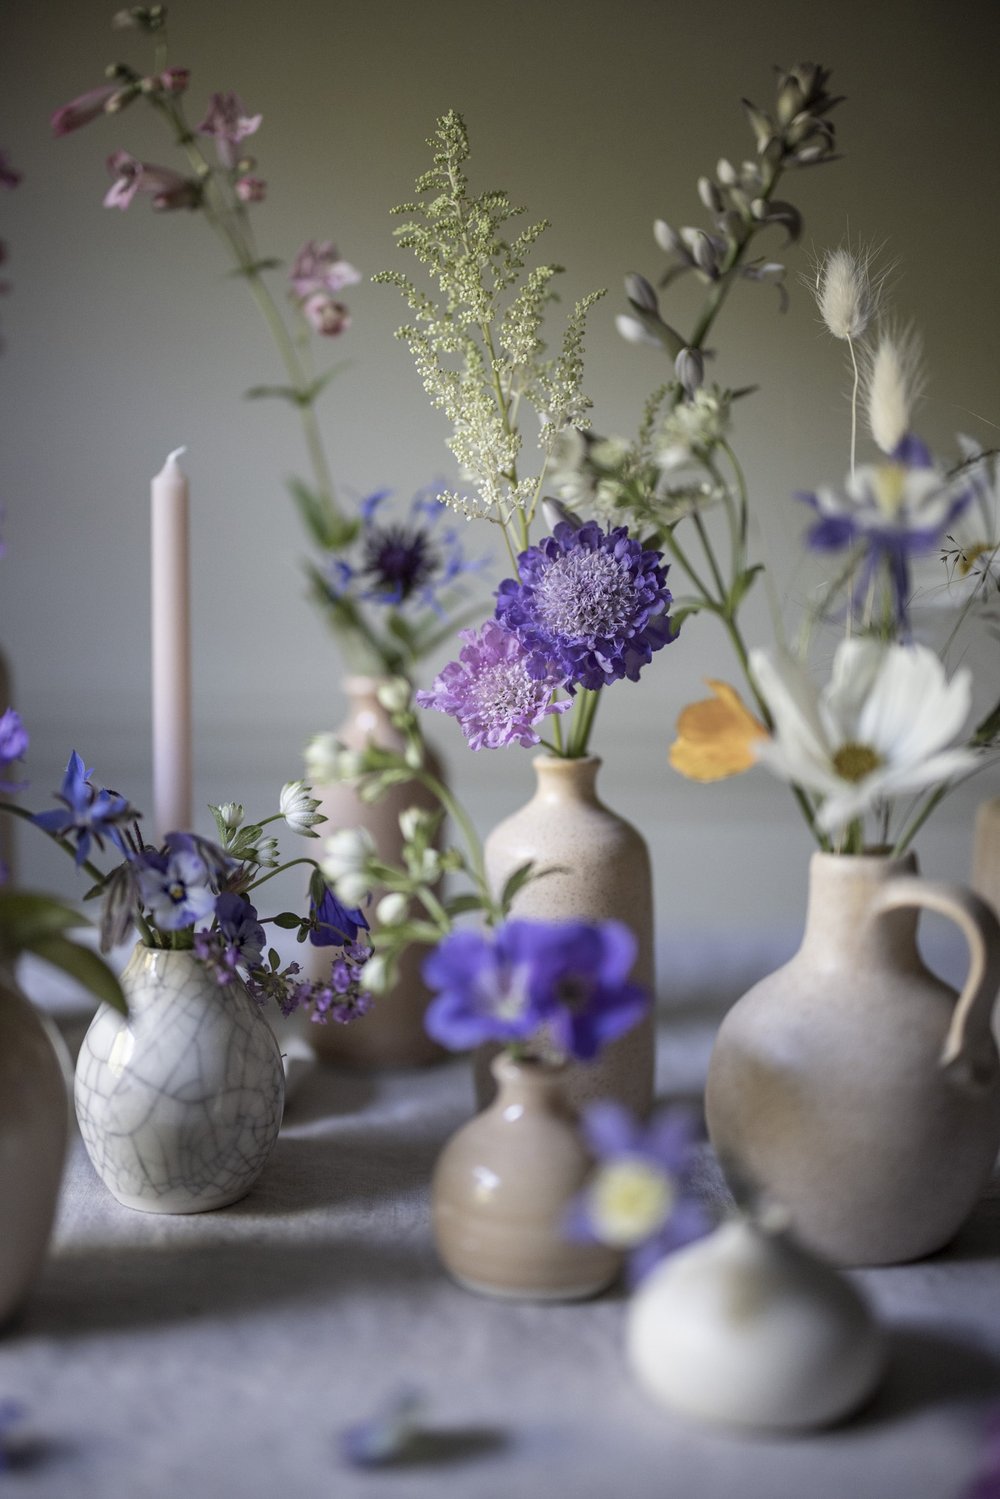 2-Choosing-flowers-for-vases-Paper-Thin-Moon.jpg